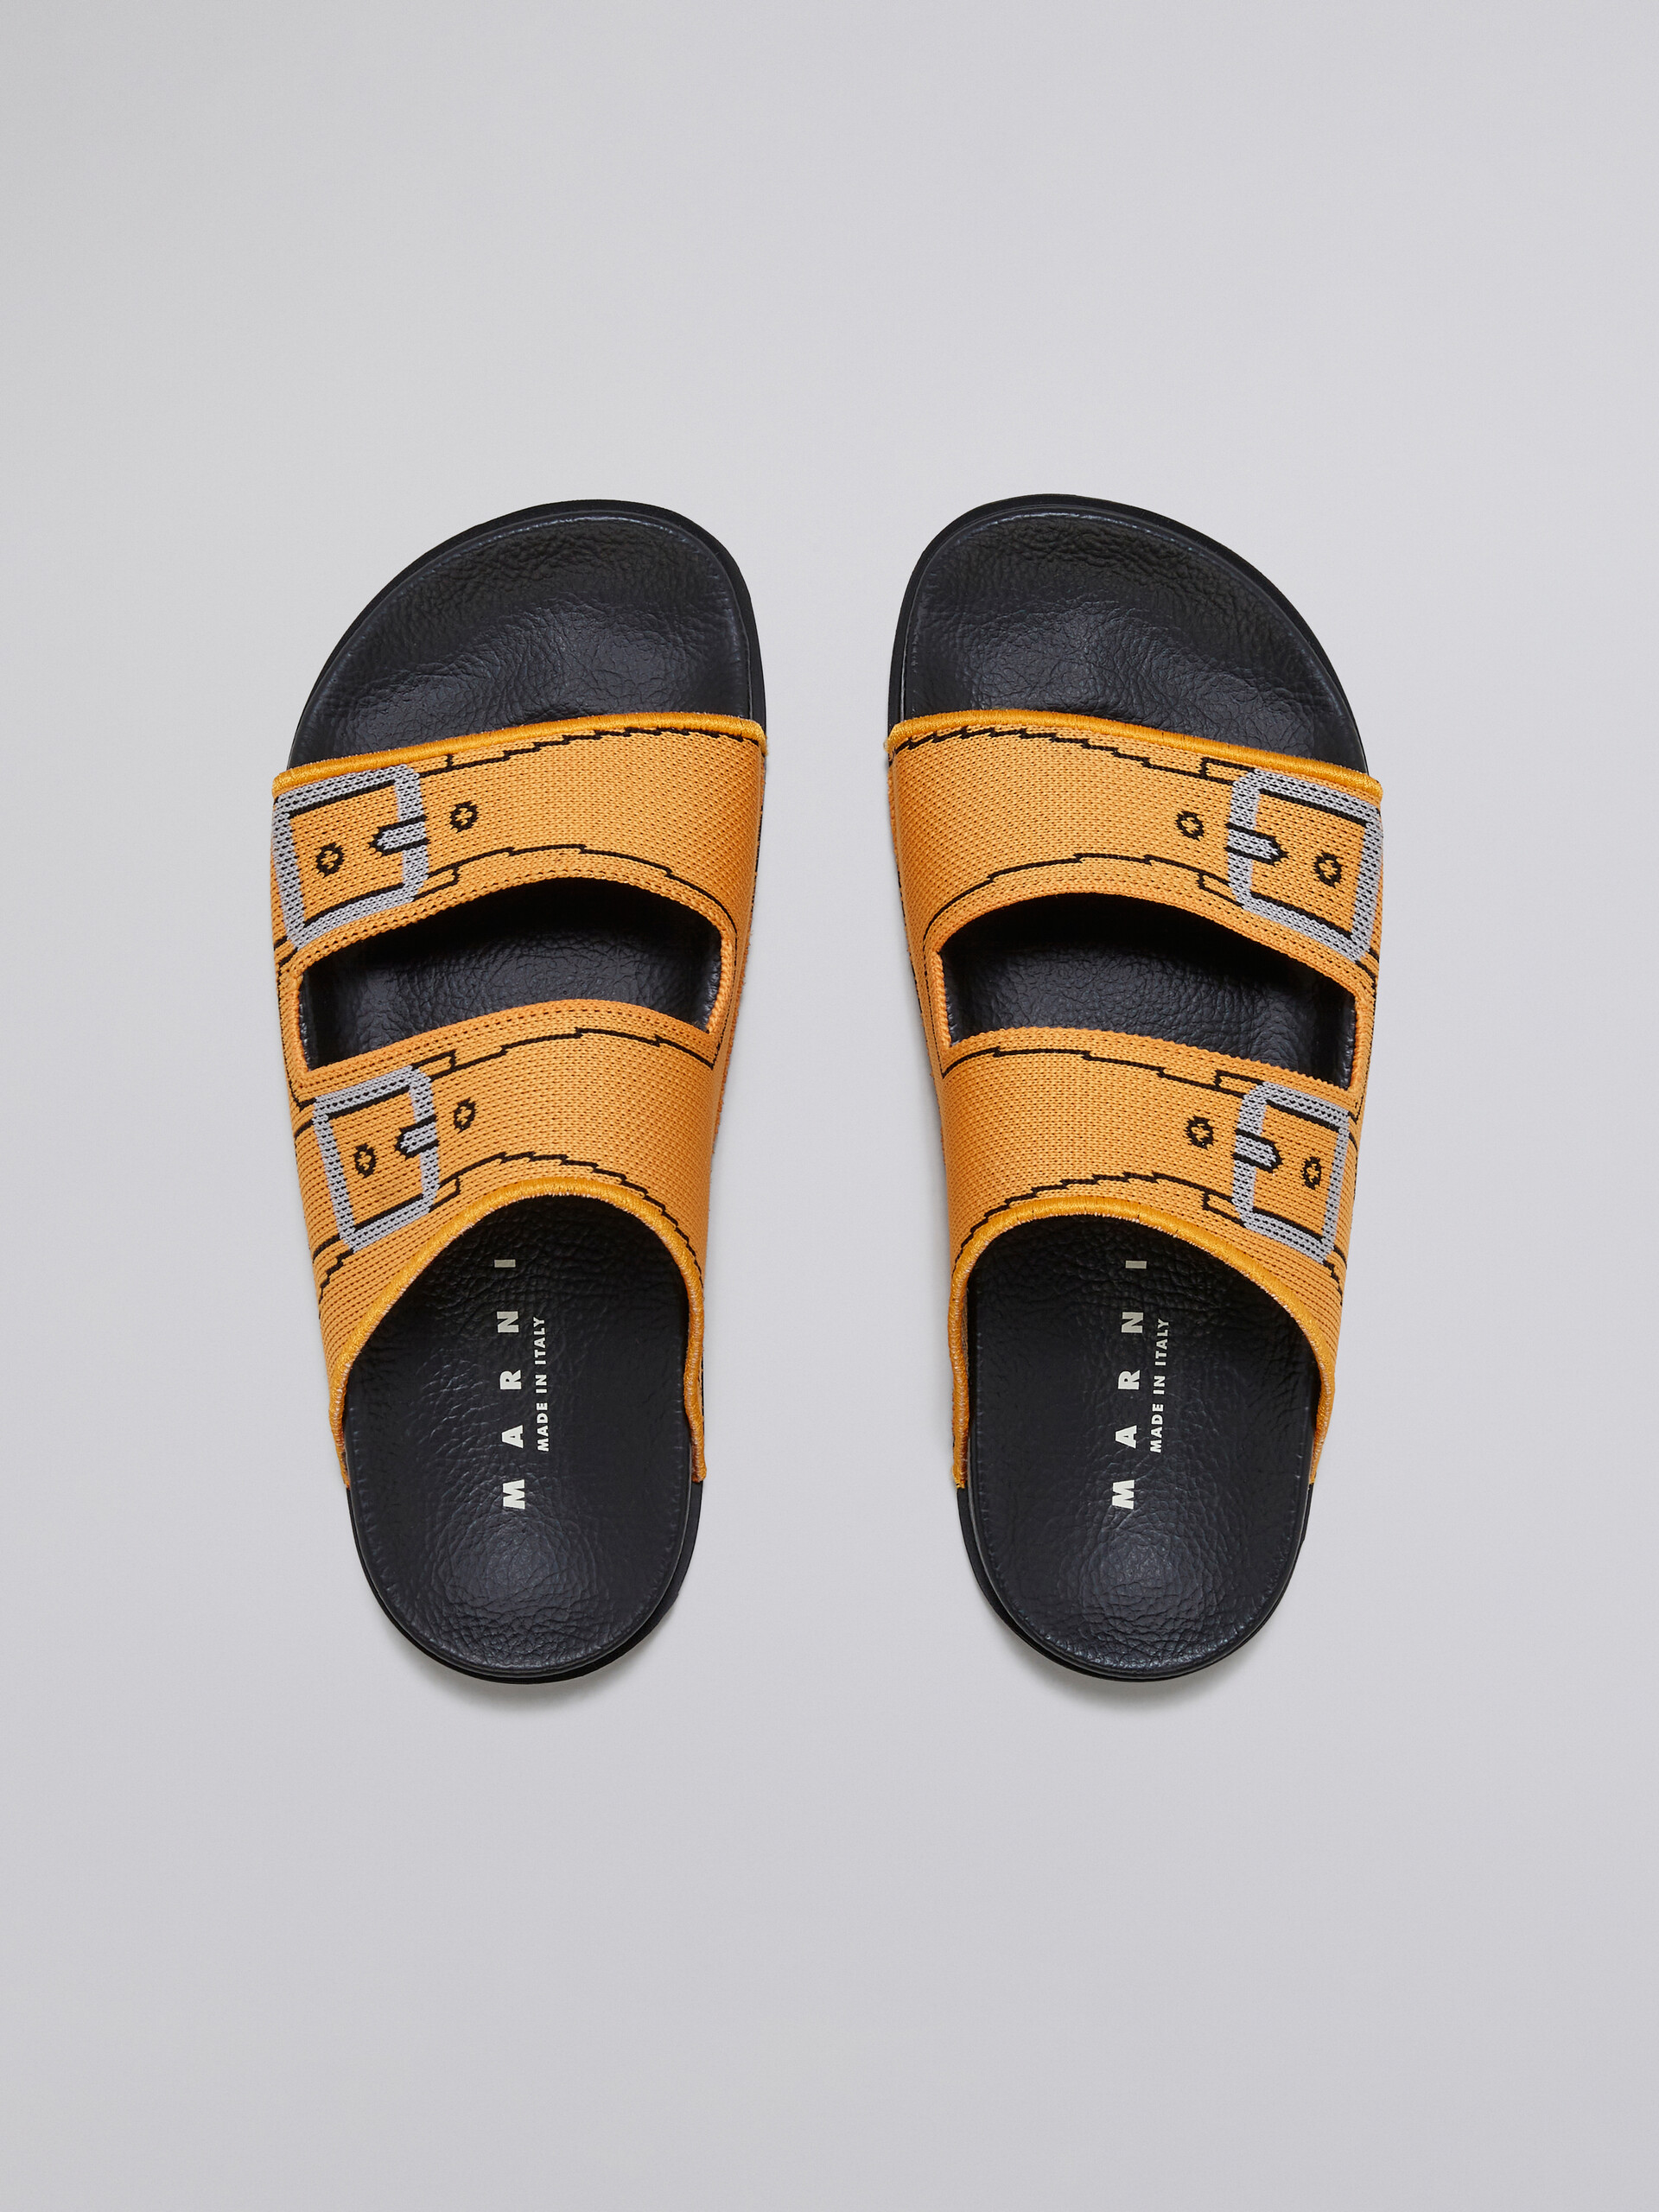 Orange trompe l'œil jacquard two-strap slide - Sandals - Image 4